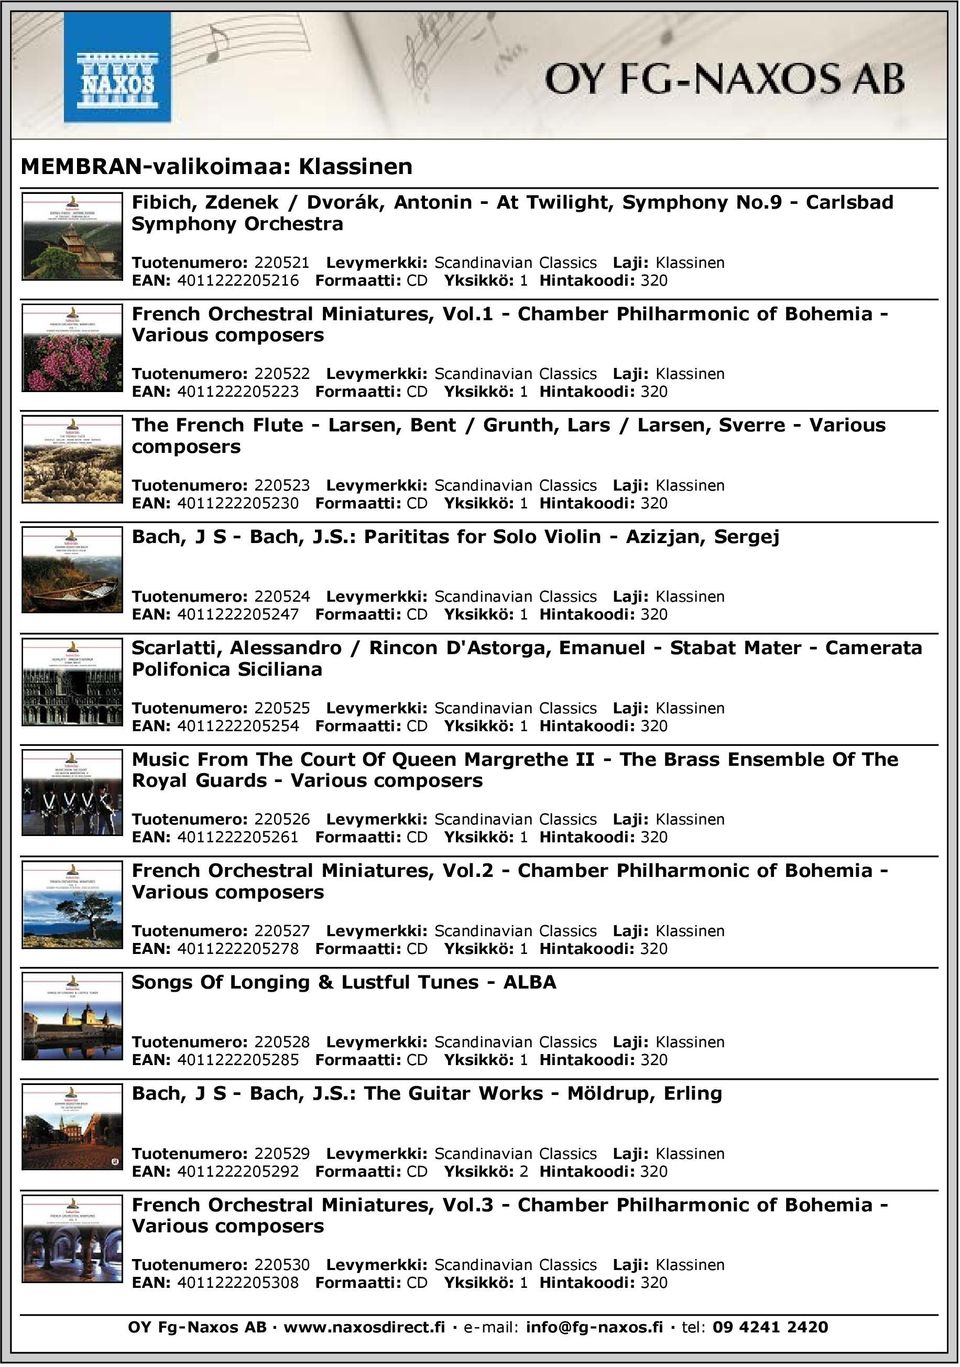 1 - Chamber Philharmonic of Bohemia - Various composers Tuotenumero: 220522 Levymerkki: Scandinavian Classics Laji: Klassinen EAN: 4011222205223 Formaatti: CD Yksikkö: 1 Hintakoodi: 320 The French